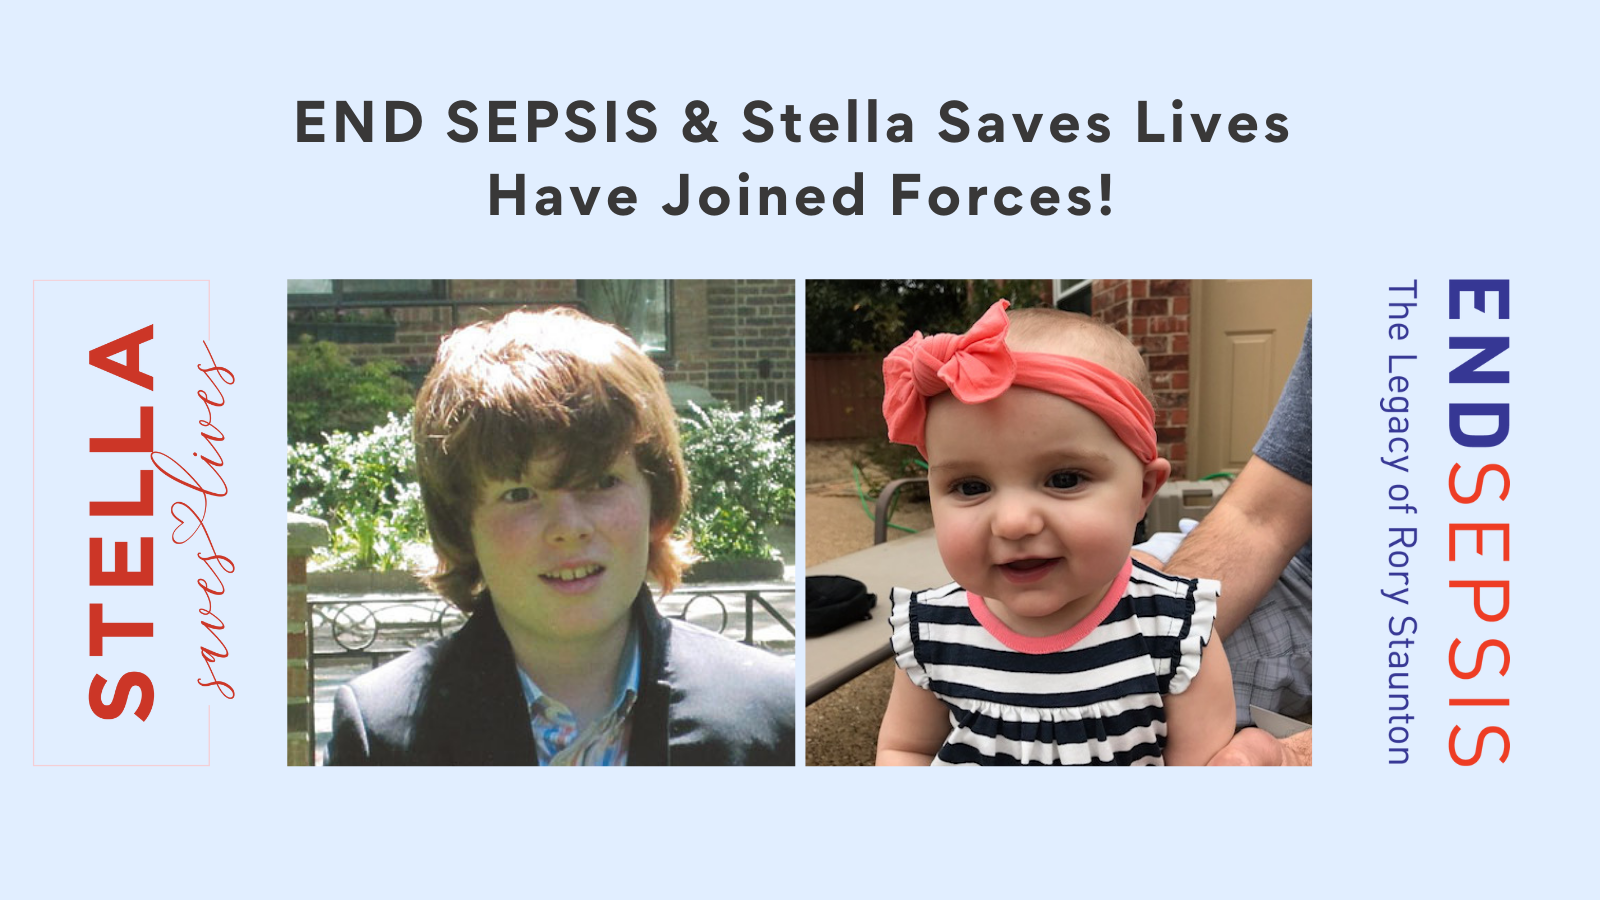 Stella Saves Lives